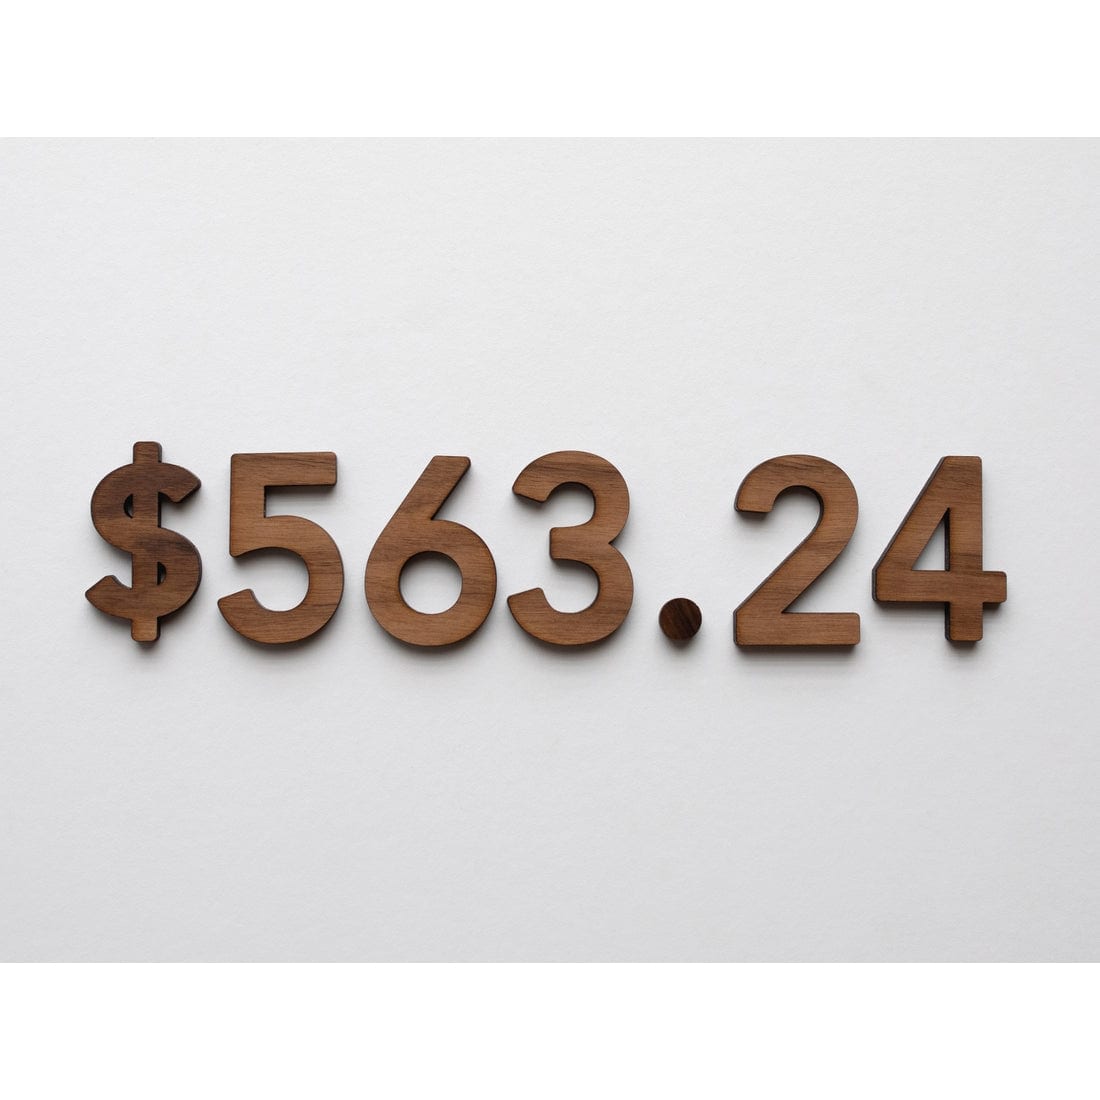 $563.24 displayed in walnut wooden numeral set